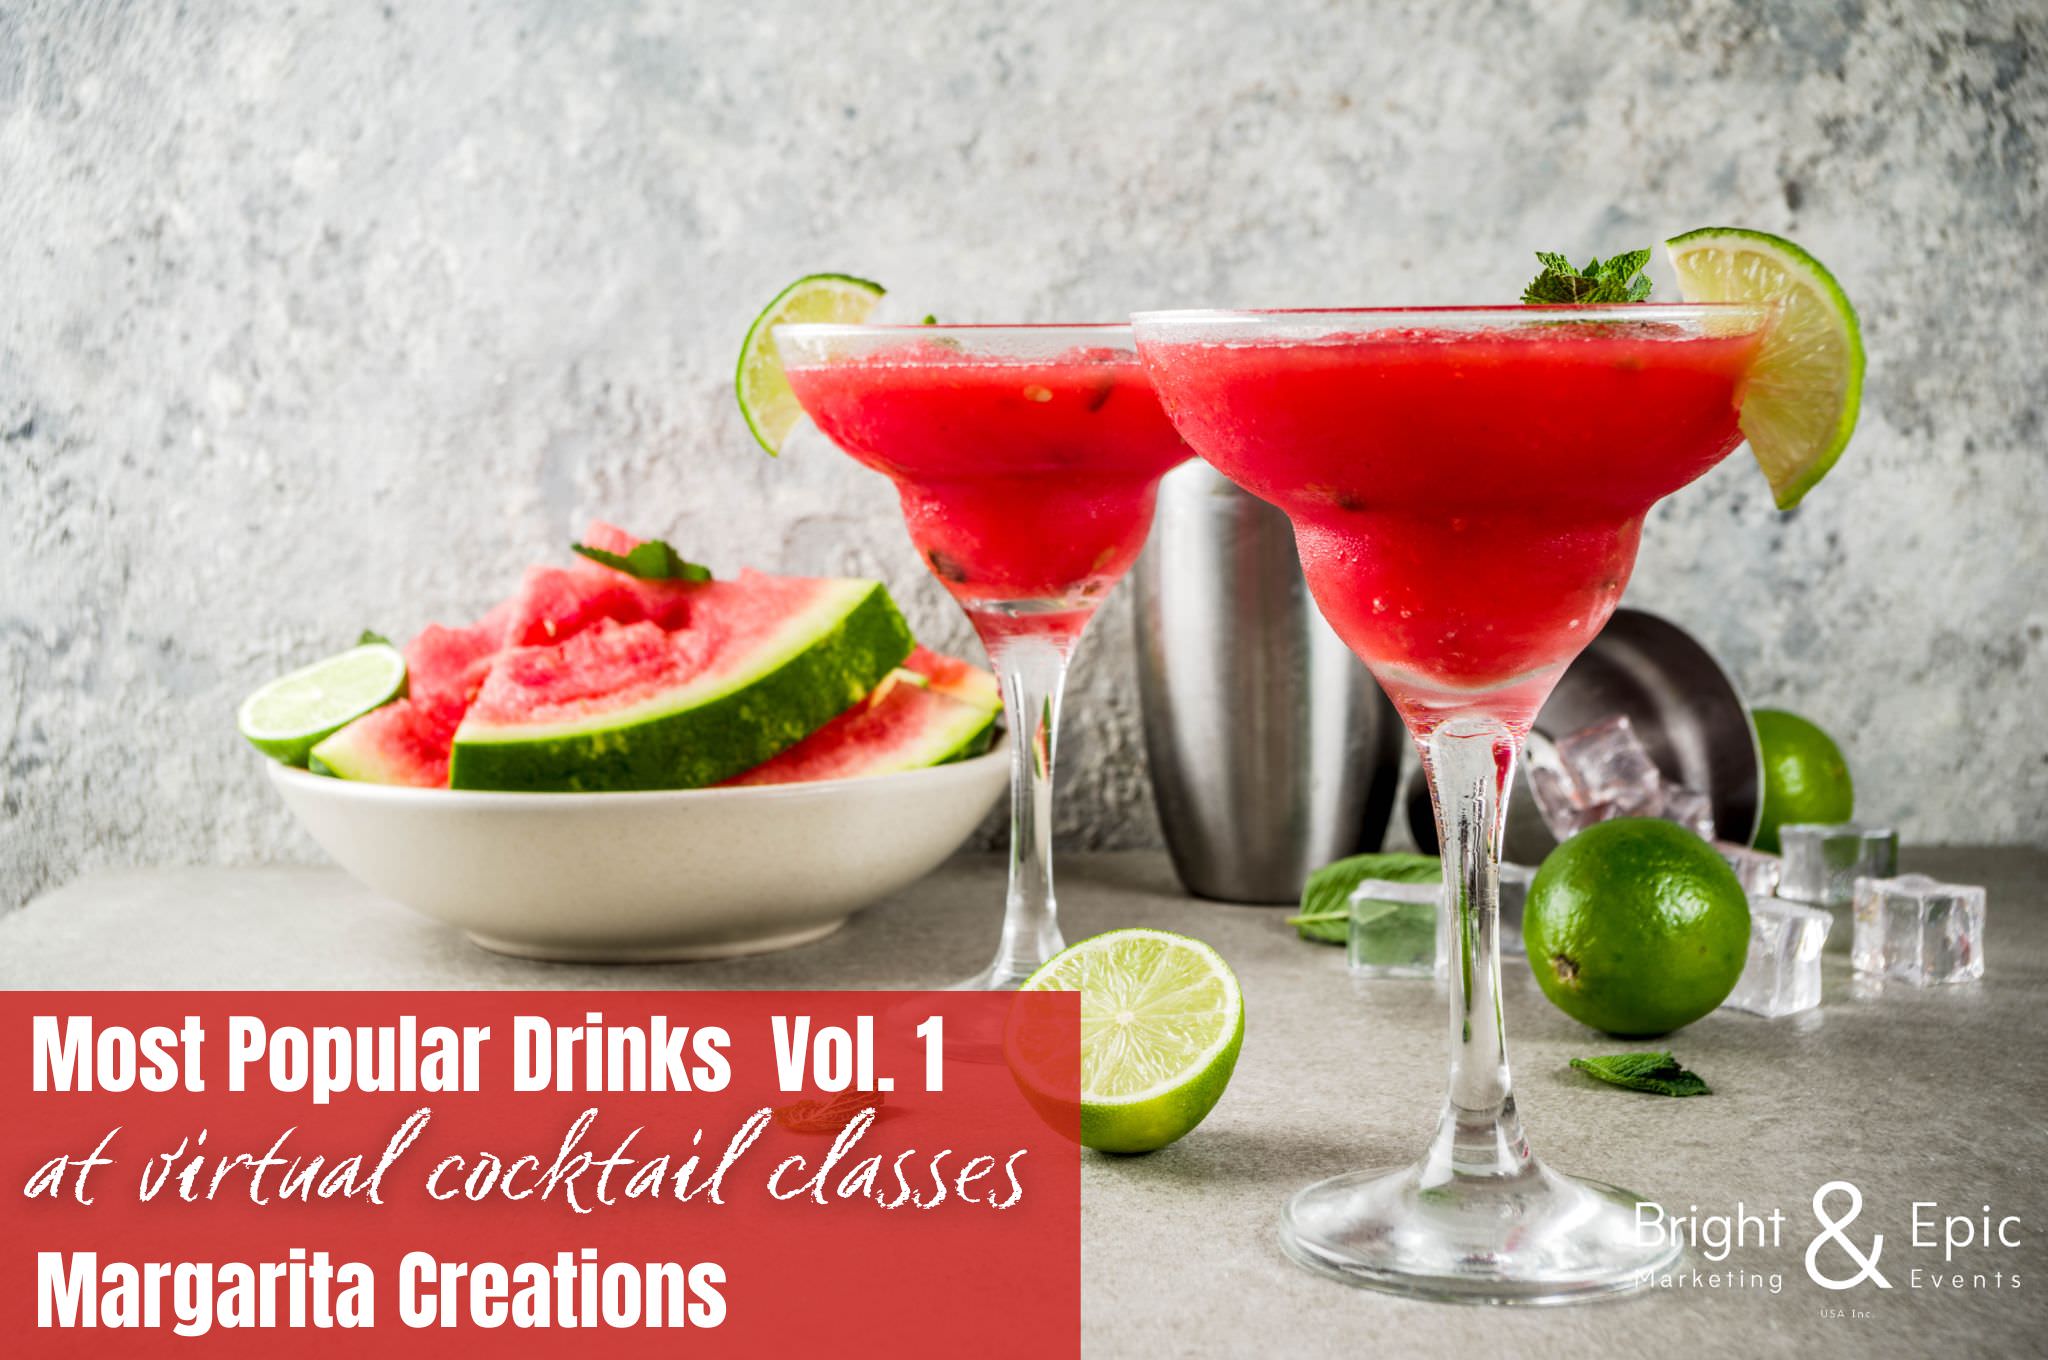 Virtual Cocktail Classes - Most popular cocktails Vol. 1 - Margarita - brightandepic USA virtual Team Building Activities